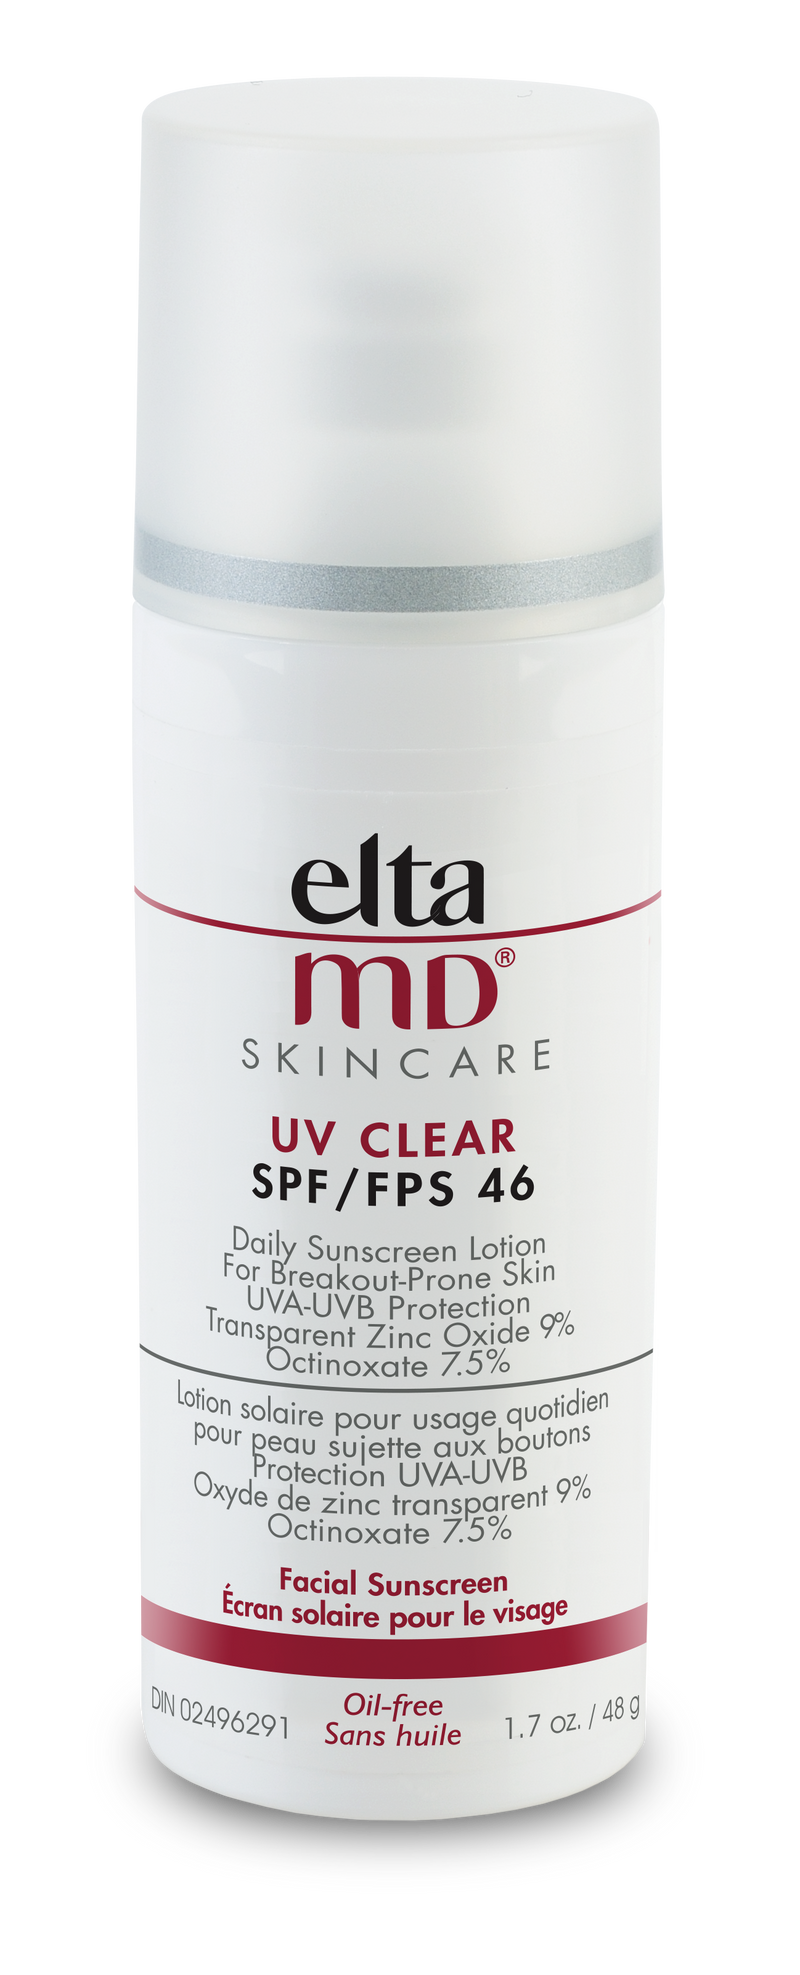 EltaMD UV CLEAR SPF 46 UNTINTED 1.7oz